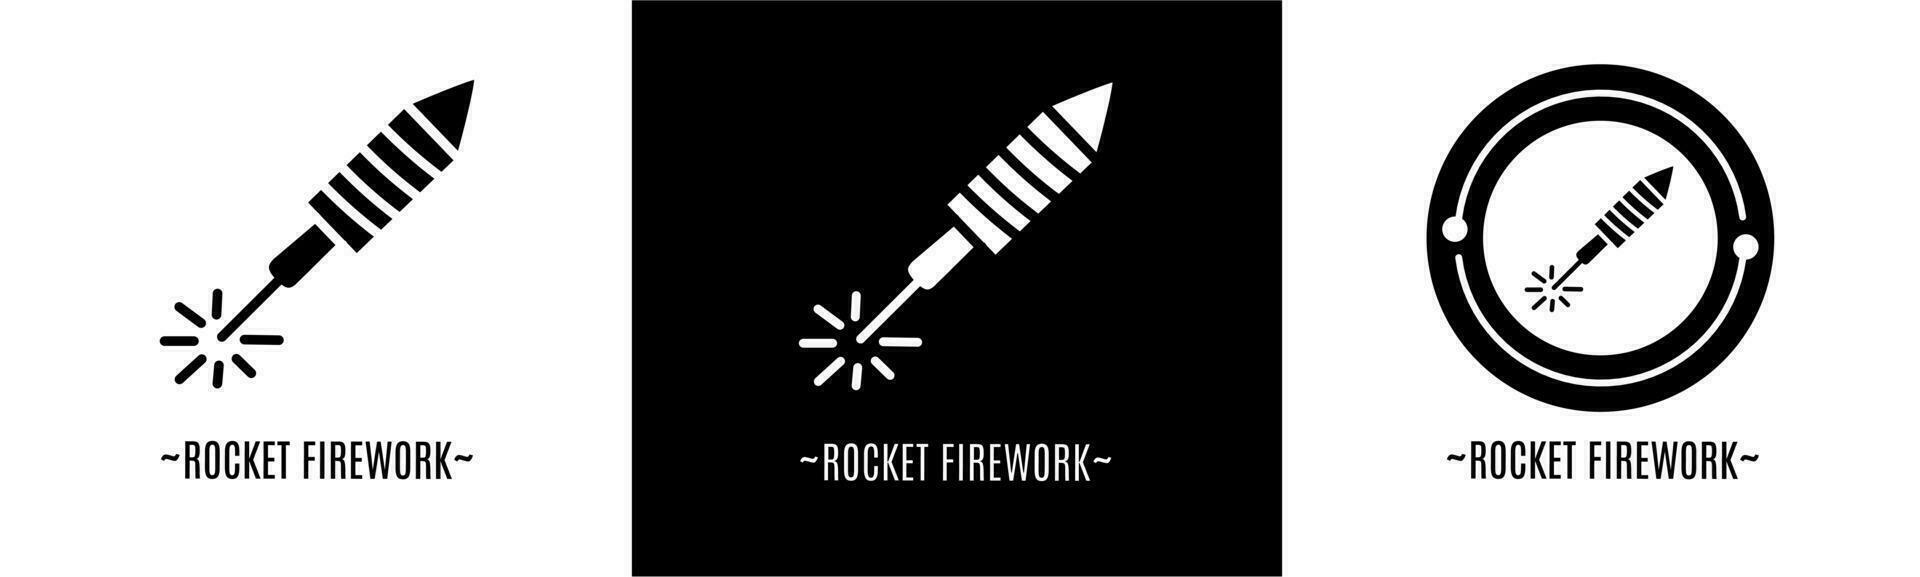 Rocket firework logo set. Collection of black and white logos. Stock vector. vector